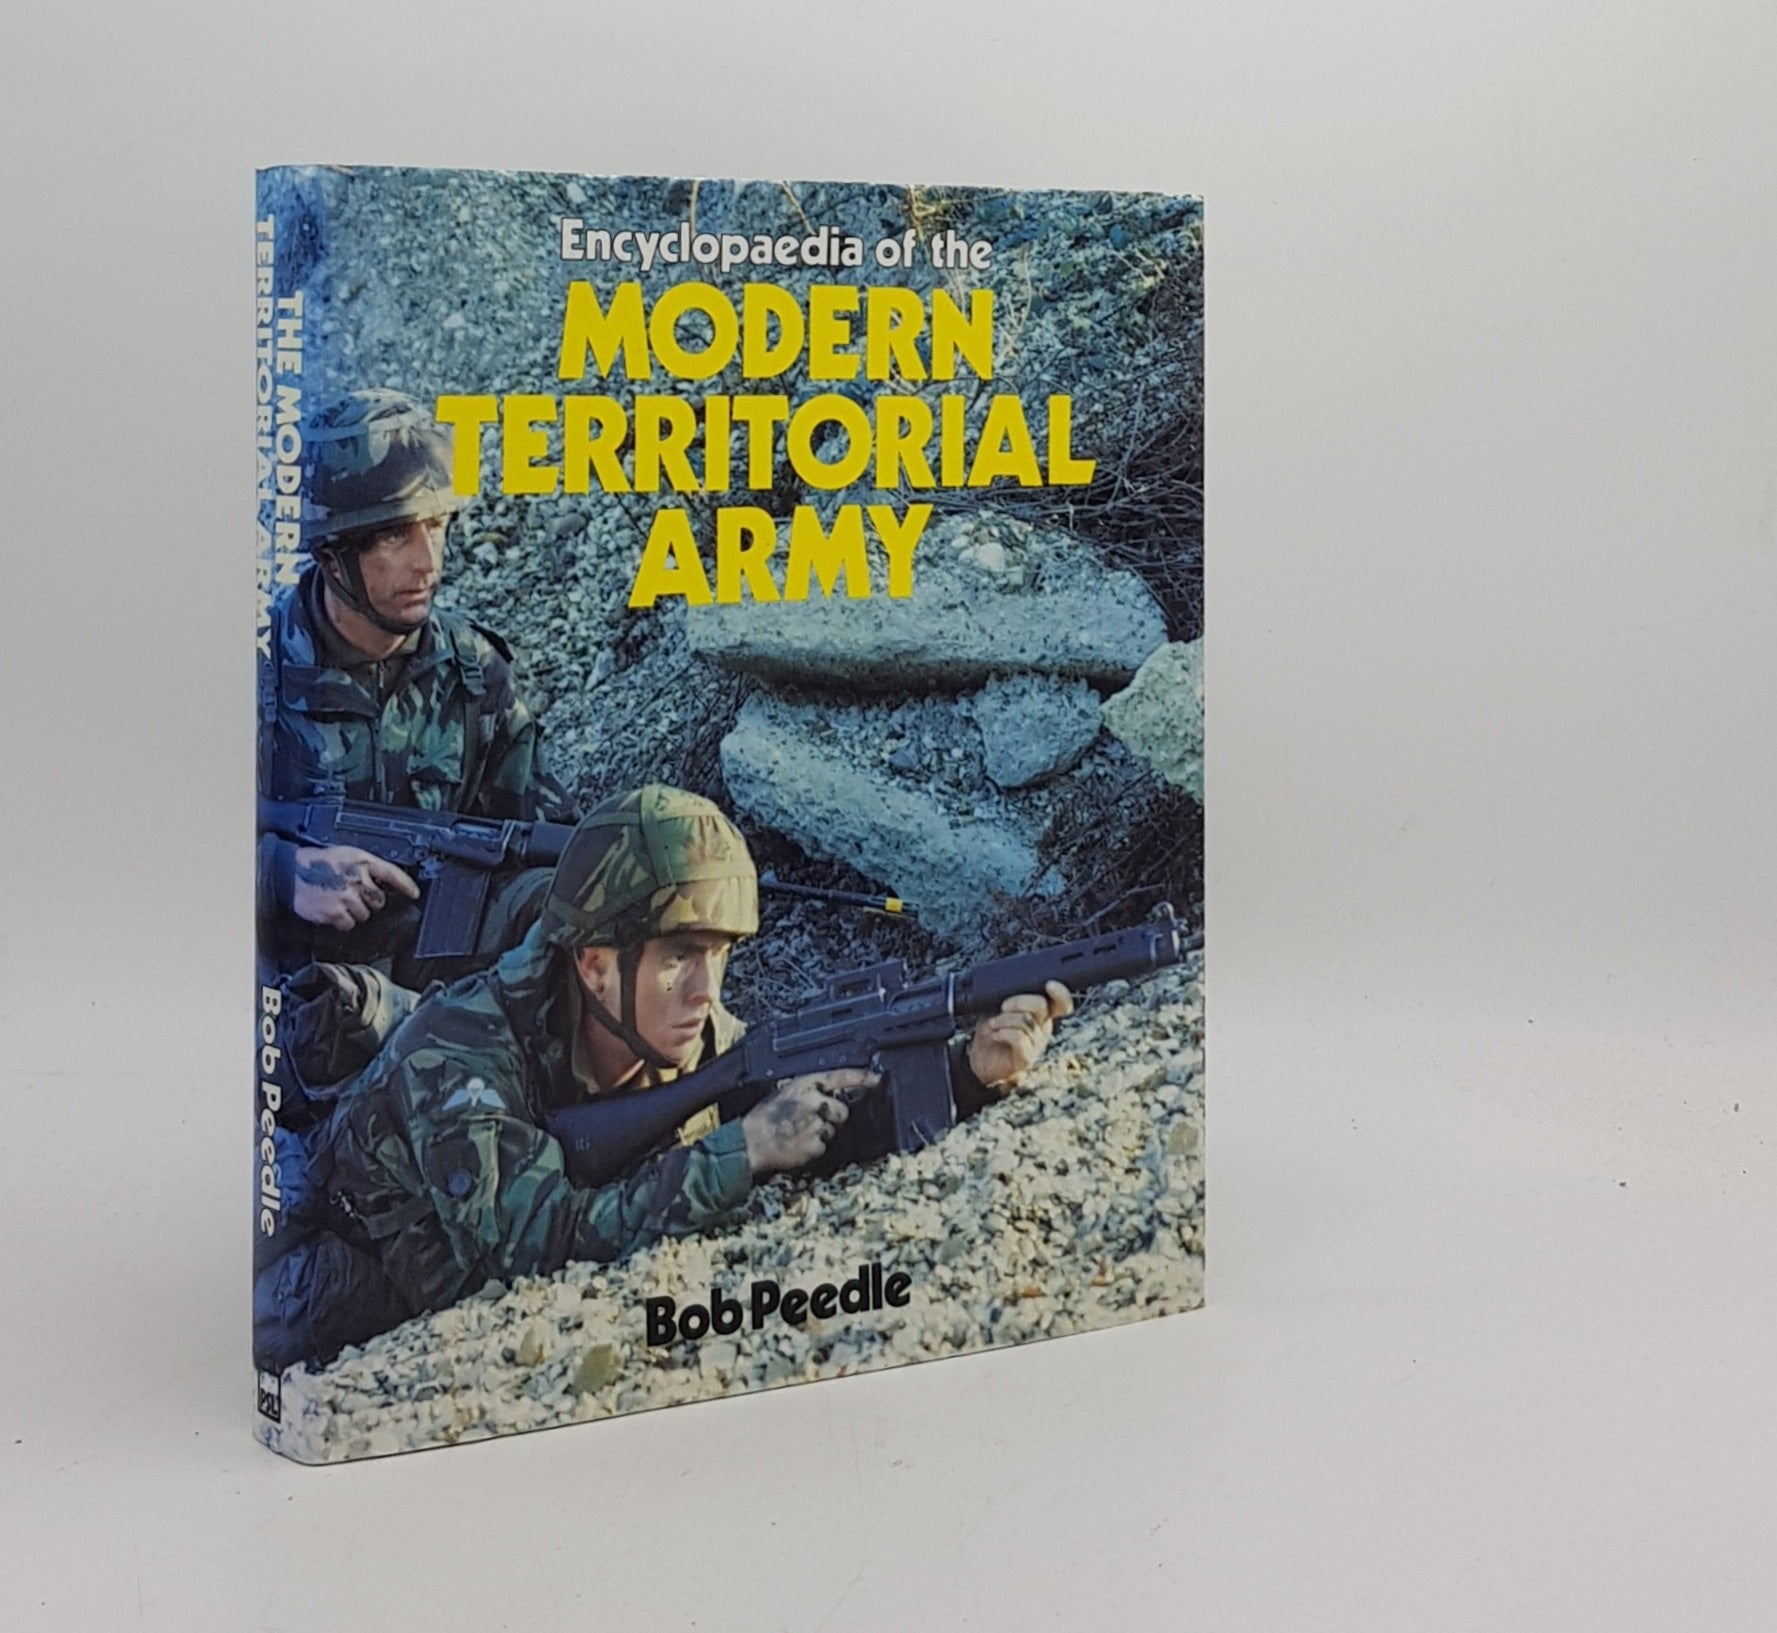 PEEDLE Bob - Encyclopaedia of the Modern Territorial Army